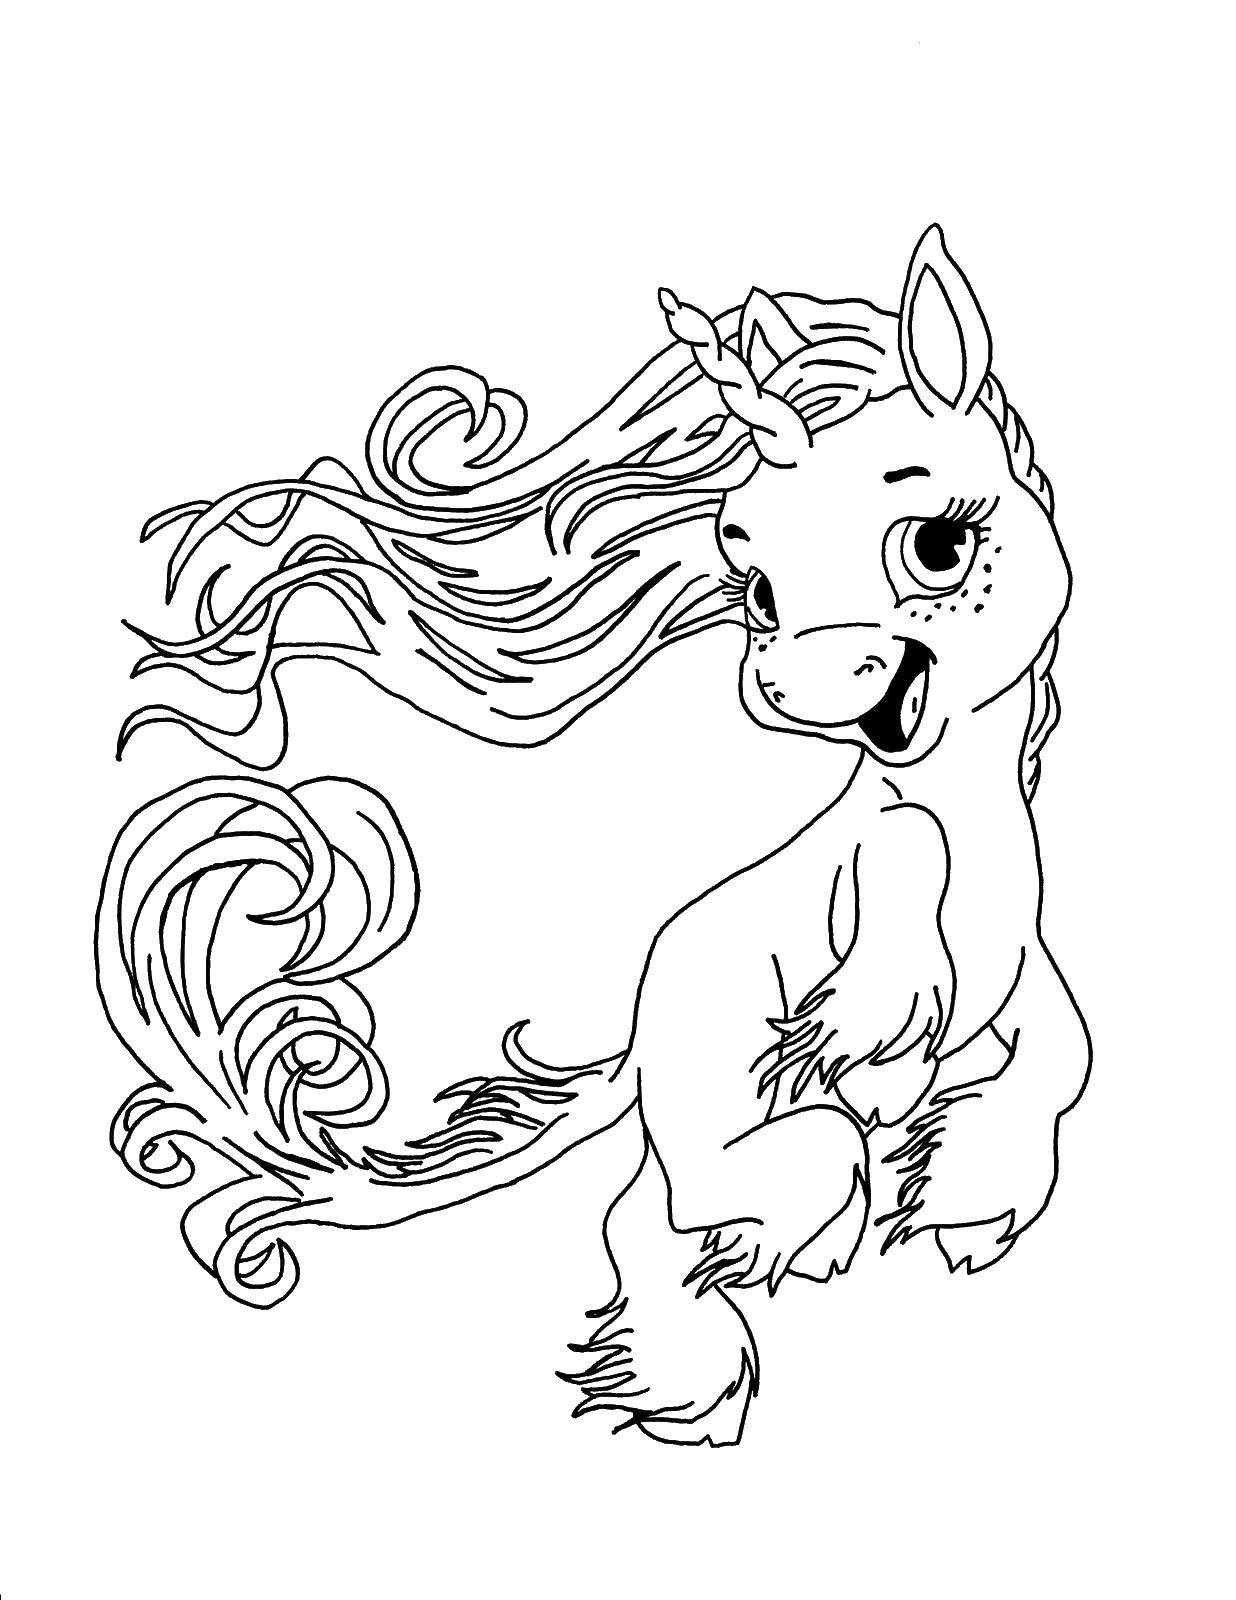 Coloring Edinoroses. Category horse. Tags:  unicorn, horse.